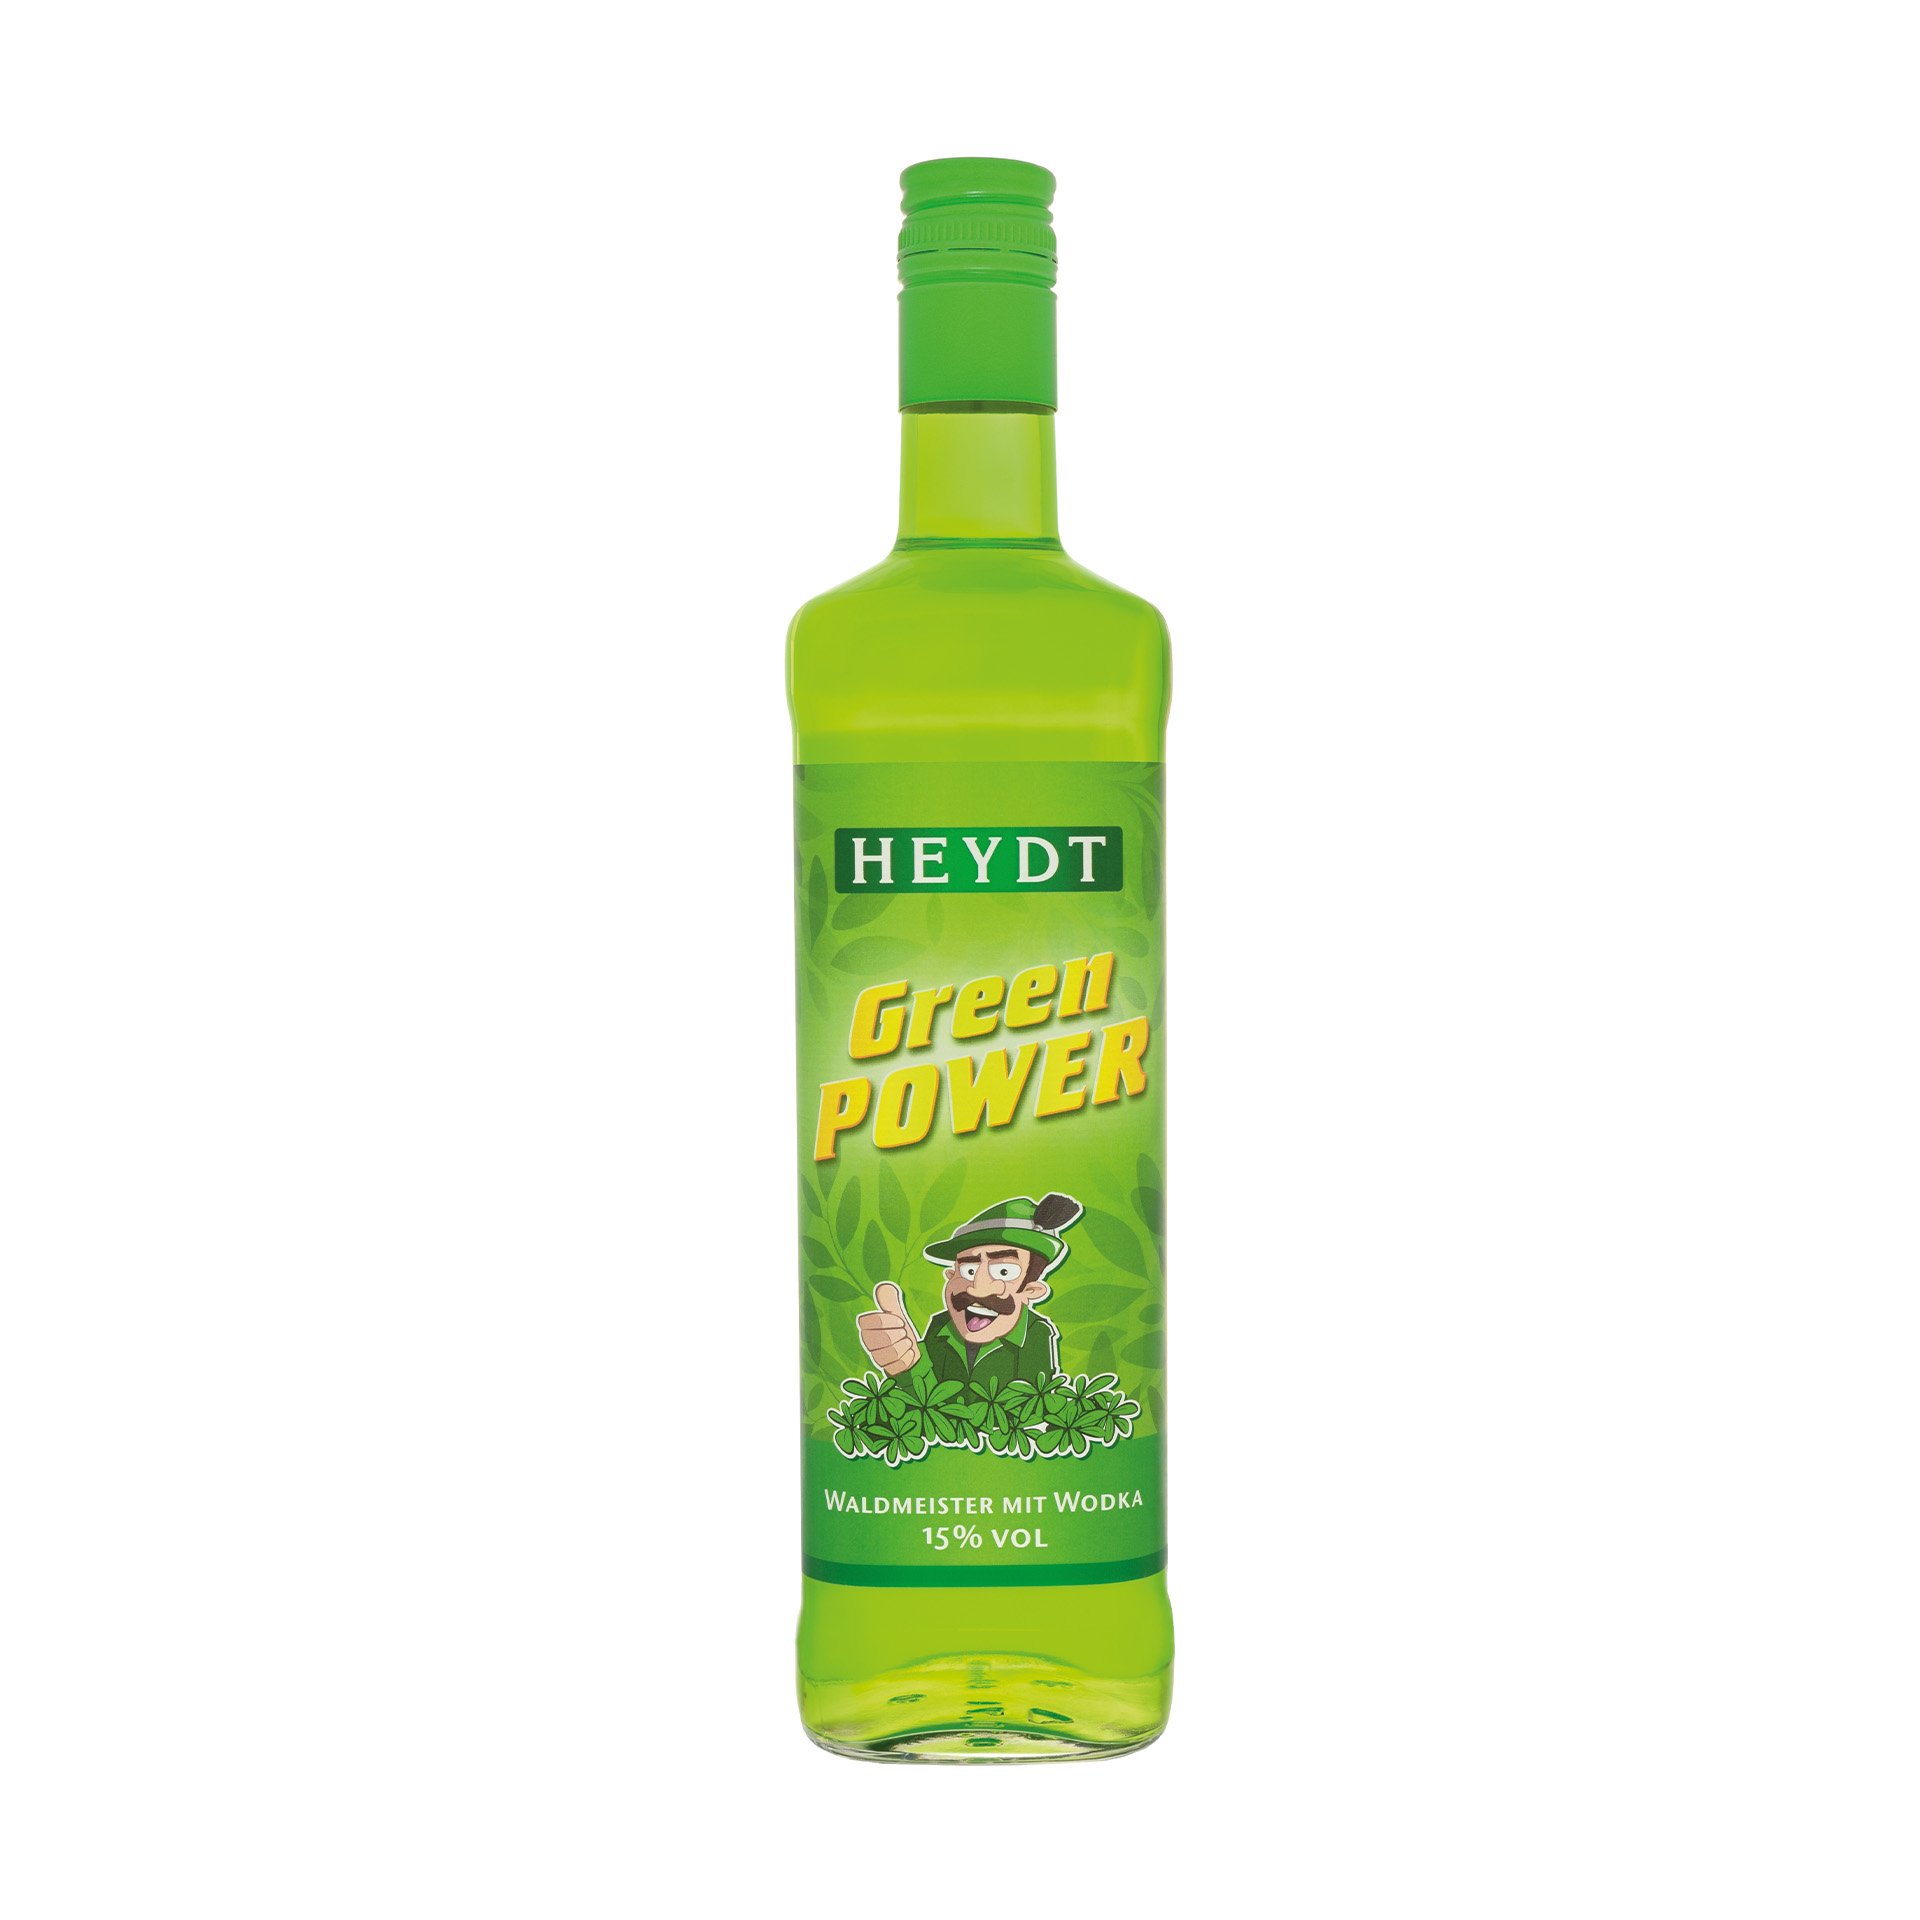 Heydt - Green Power